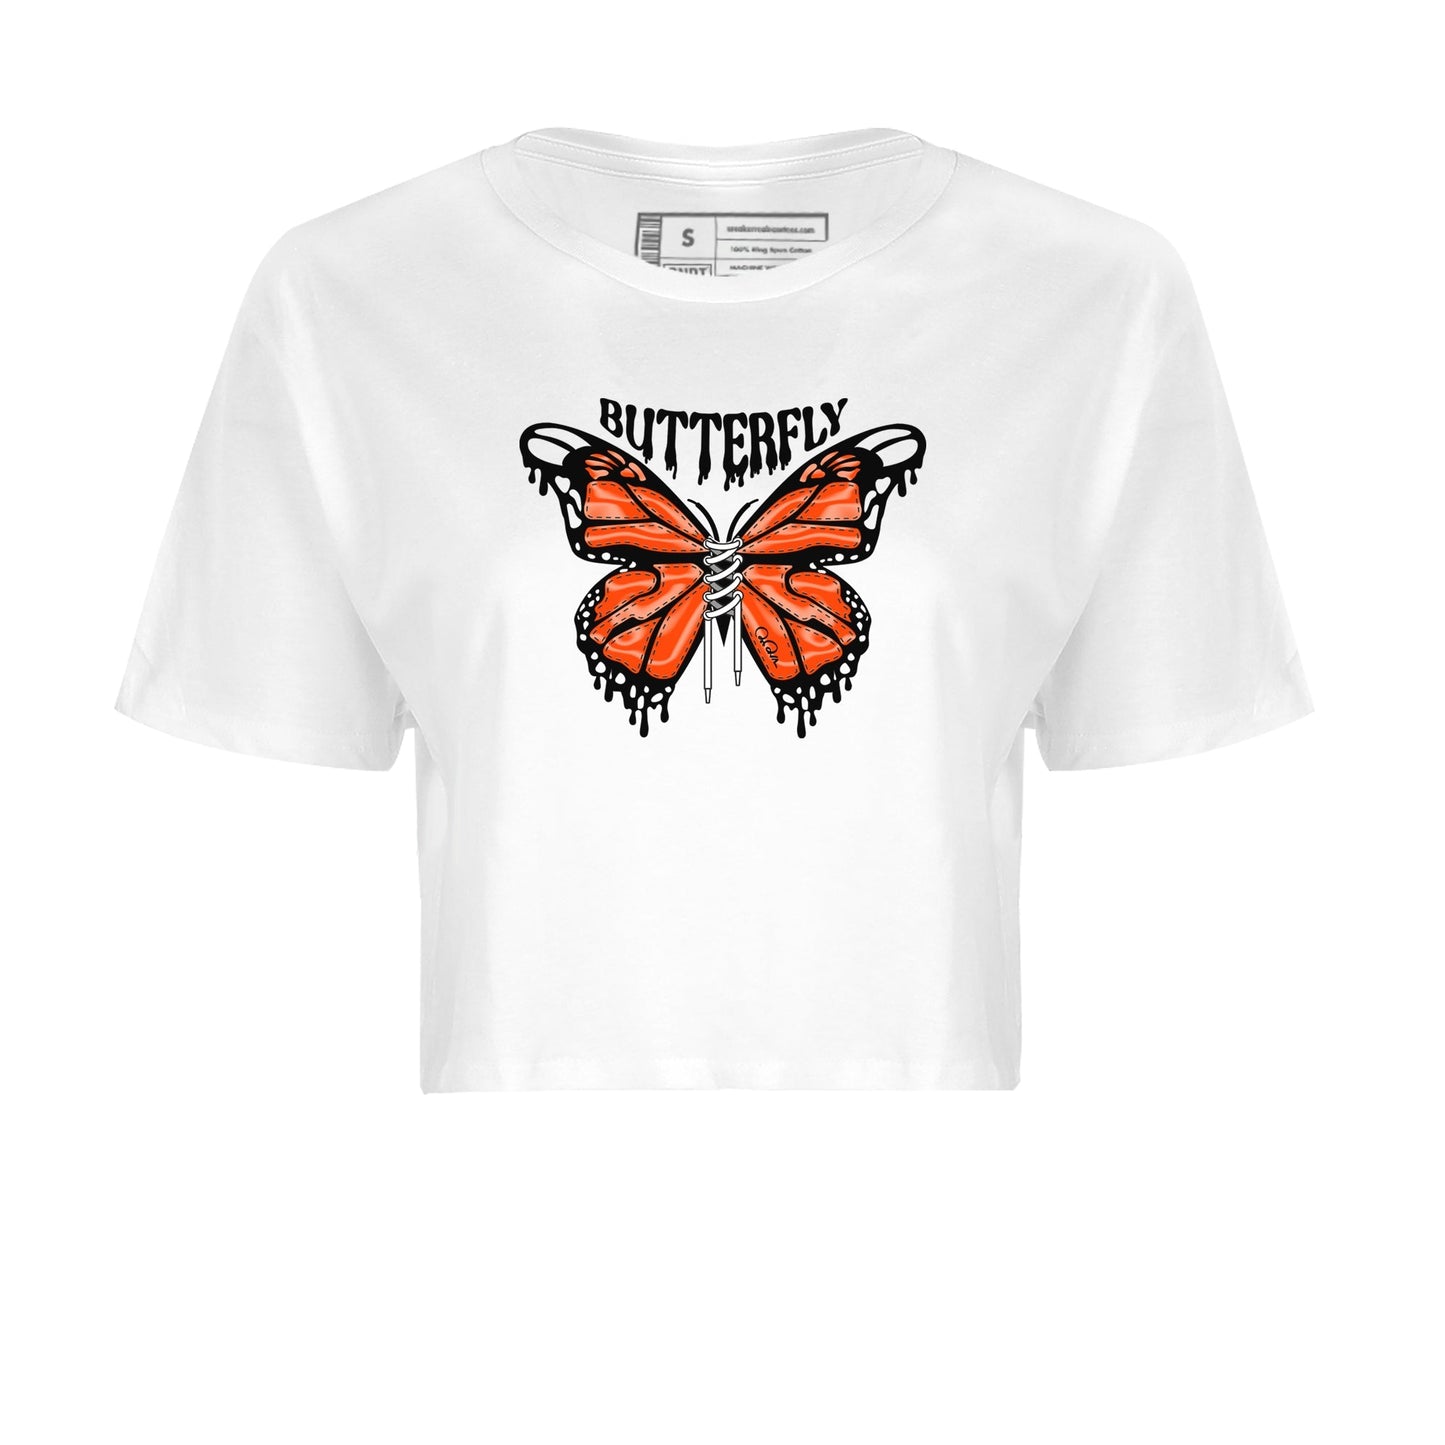 Air Jordan 12 Brilliant Orange Sneaker Match Tees Butterfly Sneaker Tees AJ12 Brilliant Orange Sneaker Release Tees Women's Shirts White 2